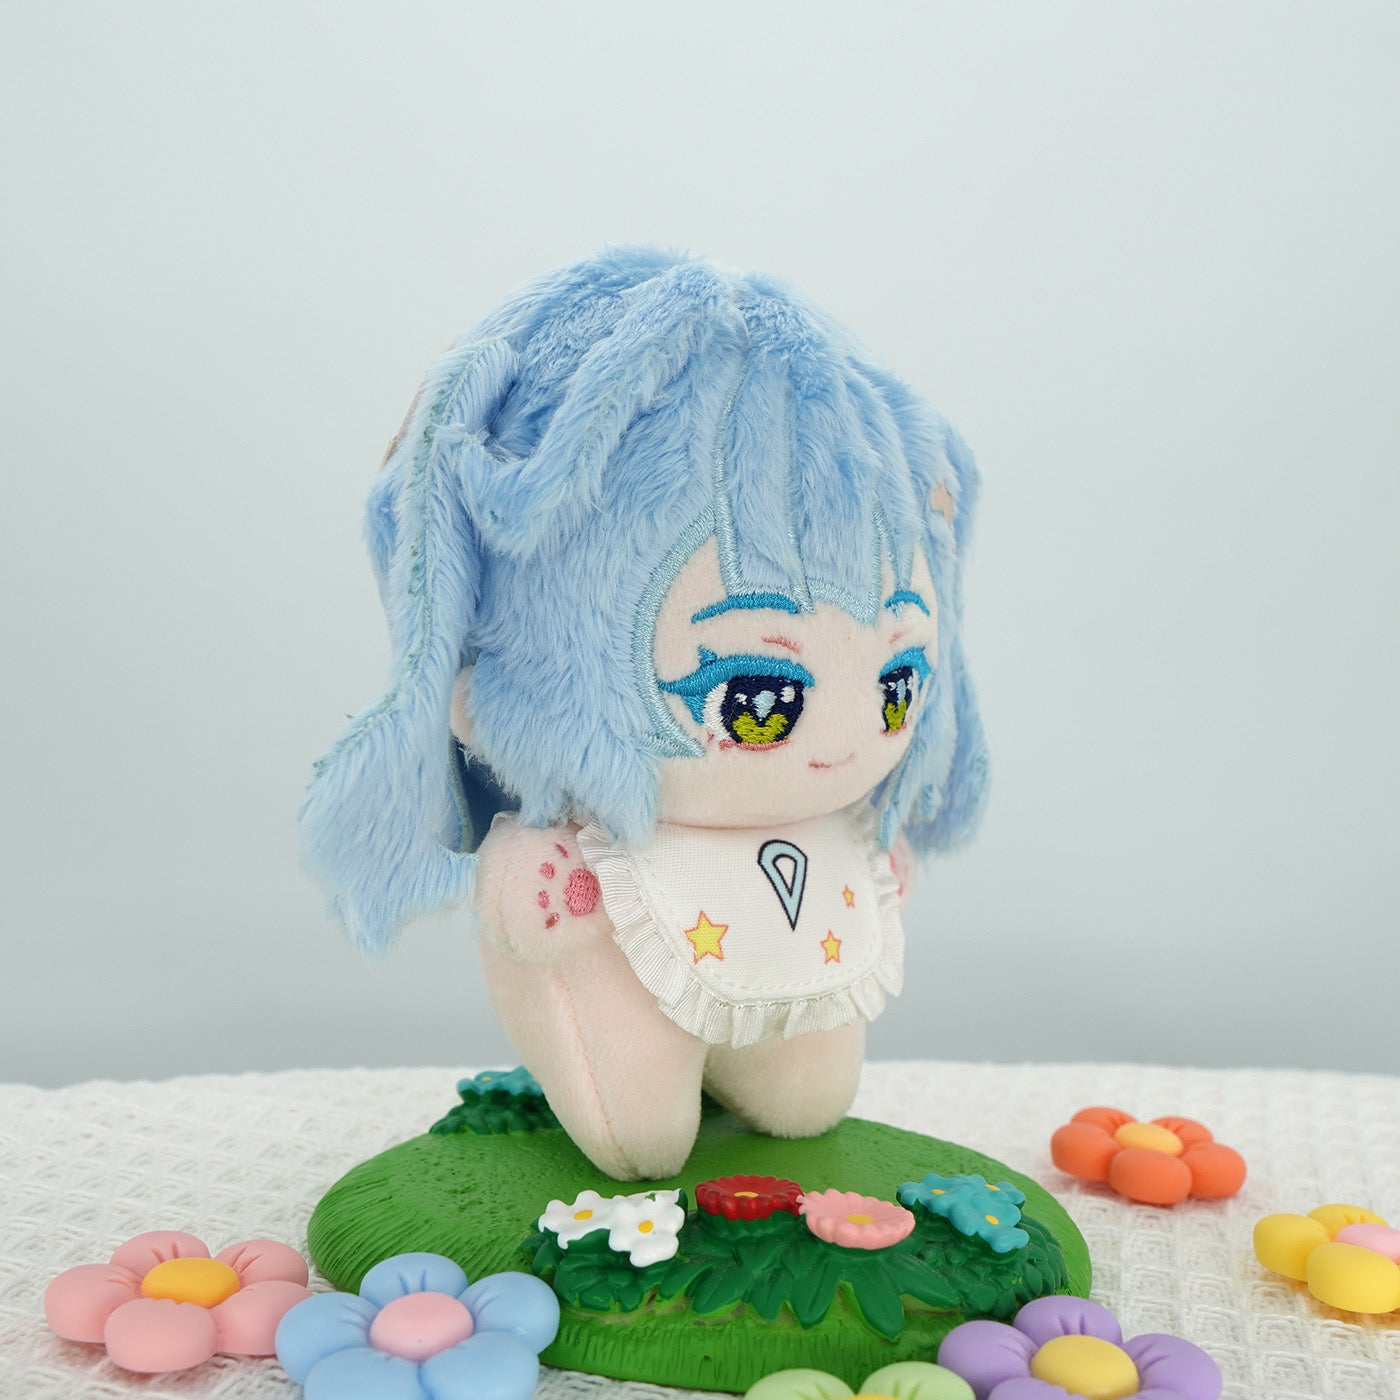 Smile House Genshin Impact Fanart Plushie Faruzan Cute Plush Doll 12 CM